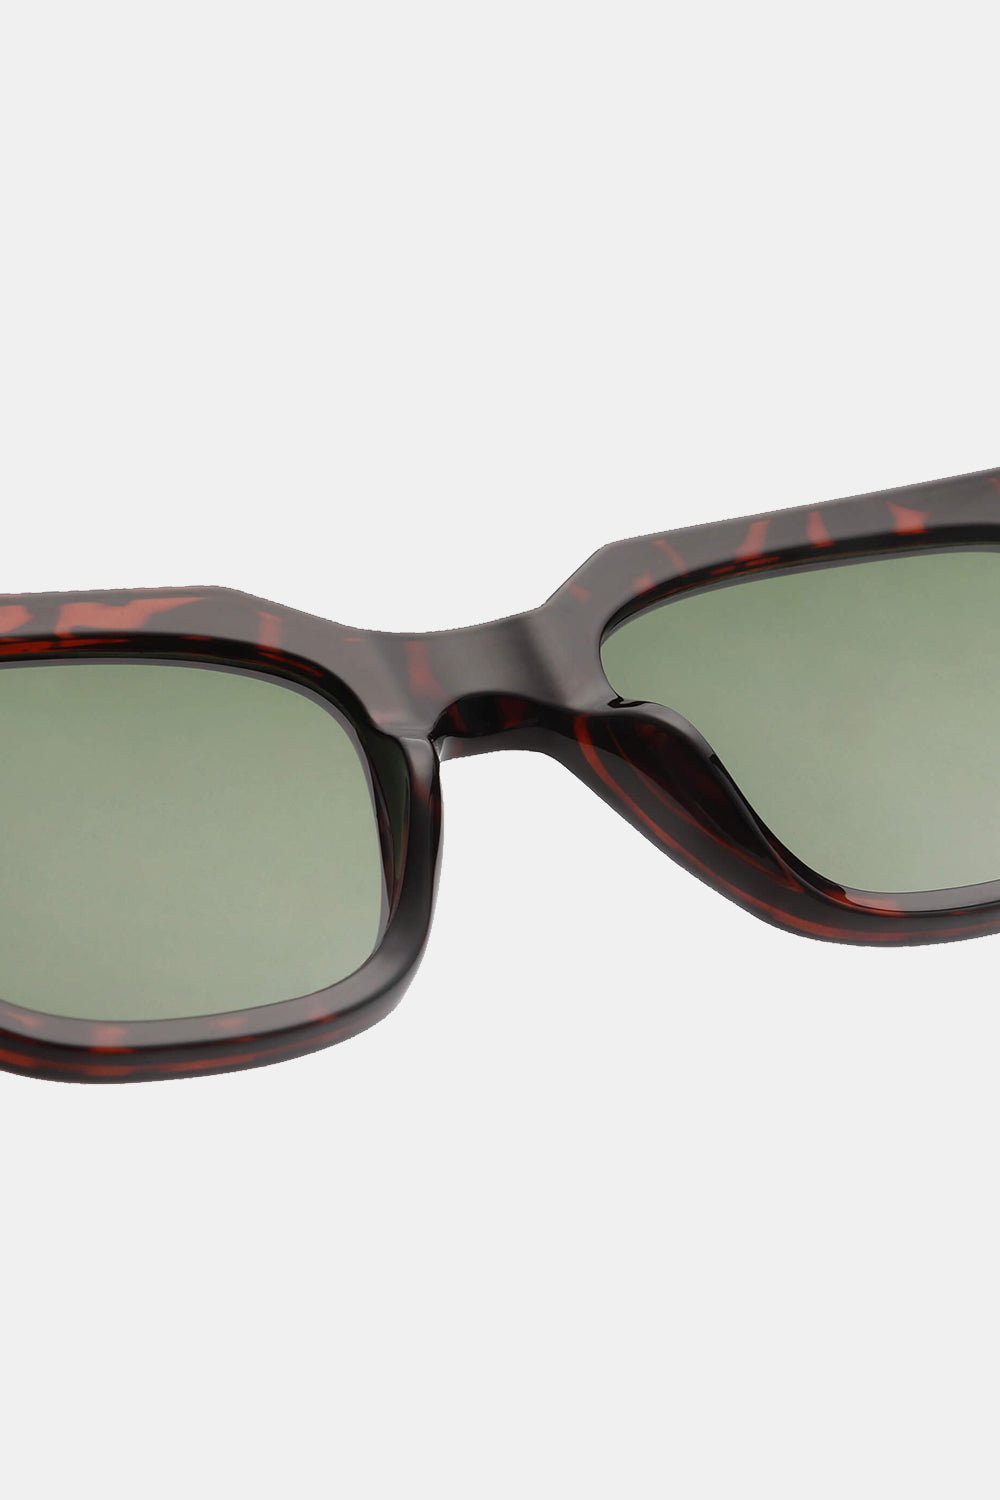 A Kjaerbede Kaws Sunglasses (Demi Tortoise Brown)